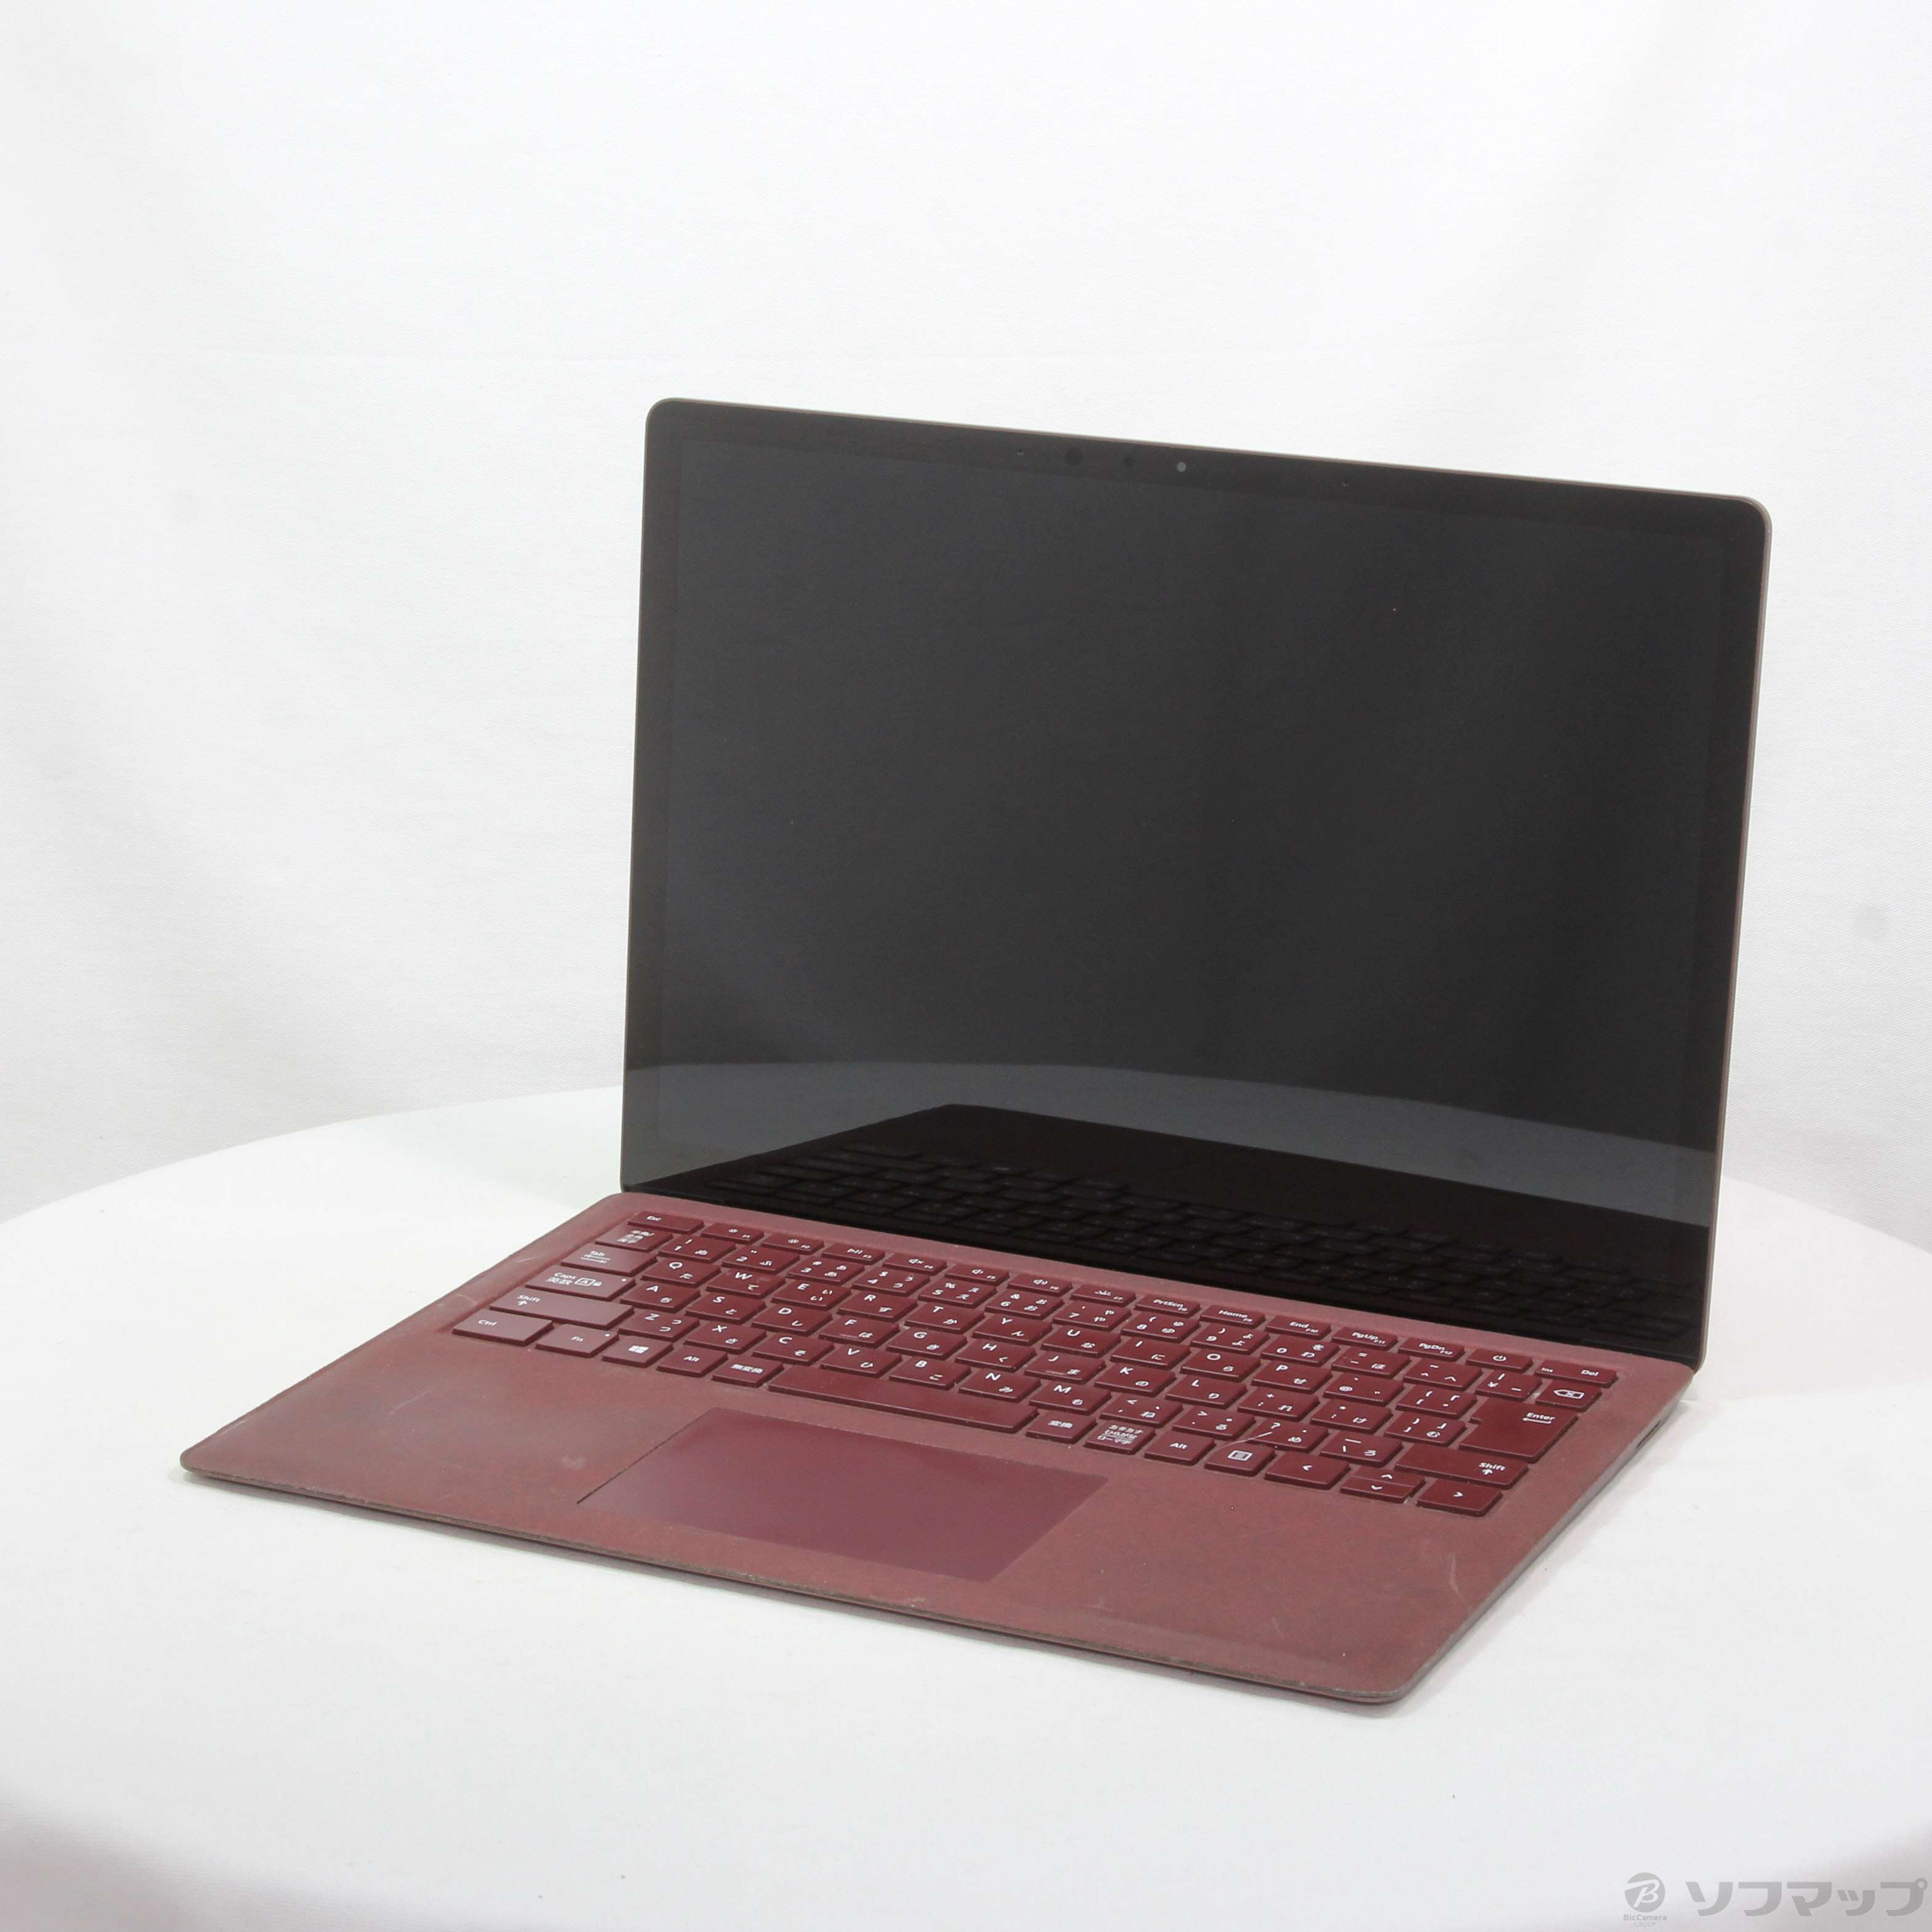 中古】Surface Laptop 2 〔Core i7／8GB／SSD256GB〕 LQQ-00037 